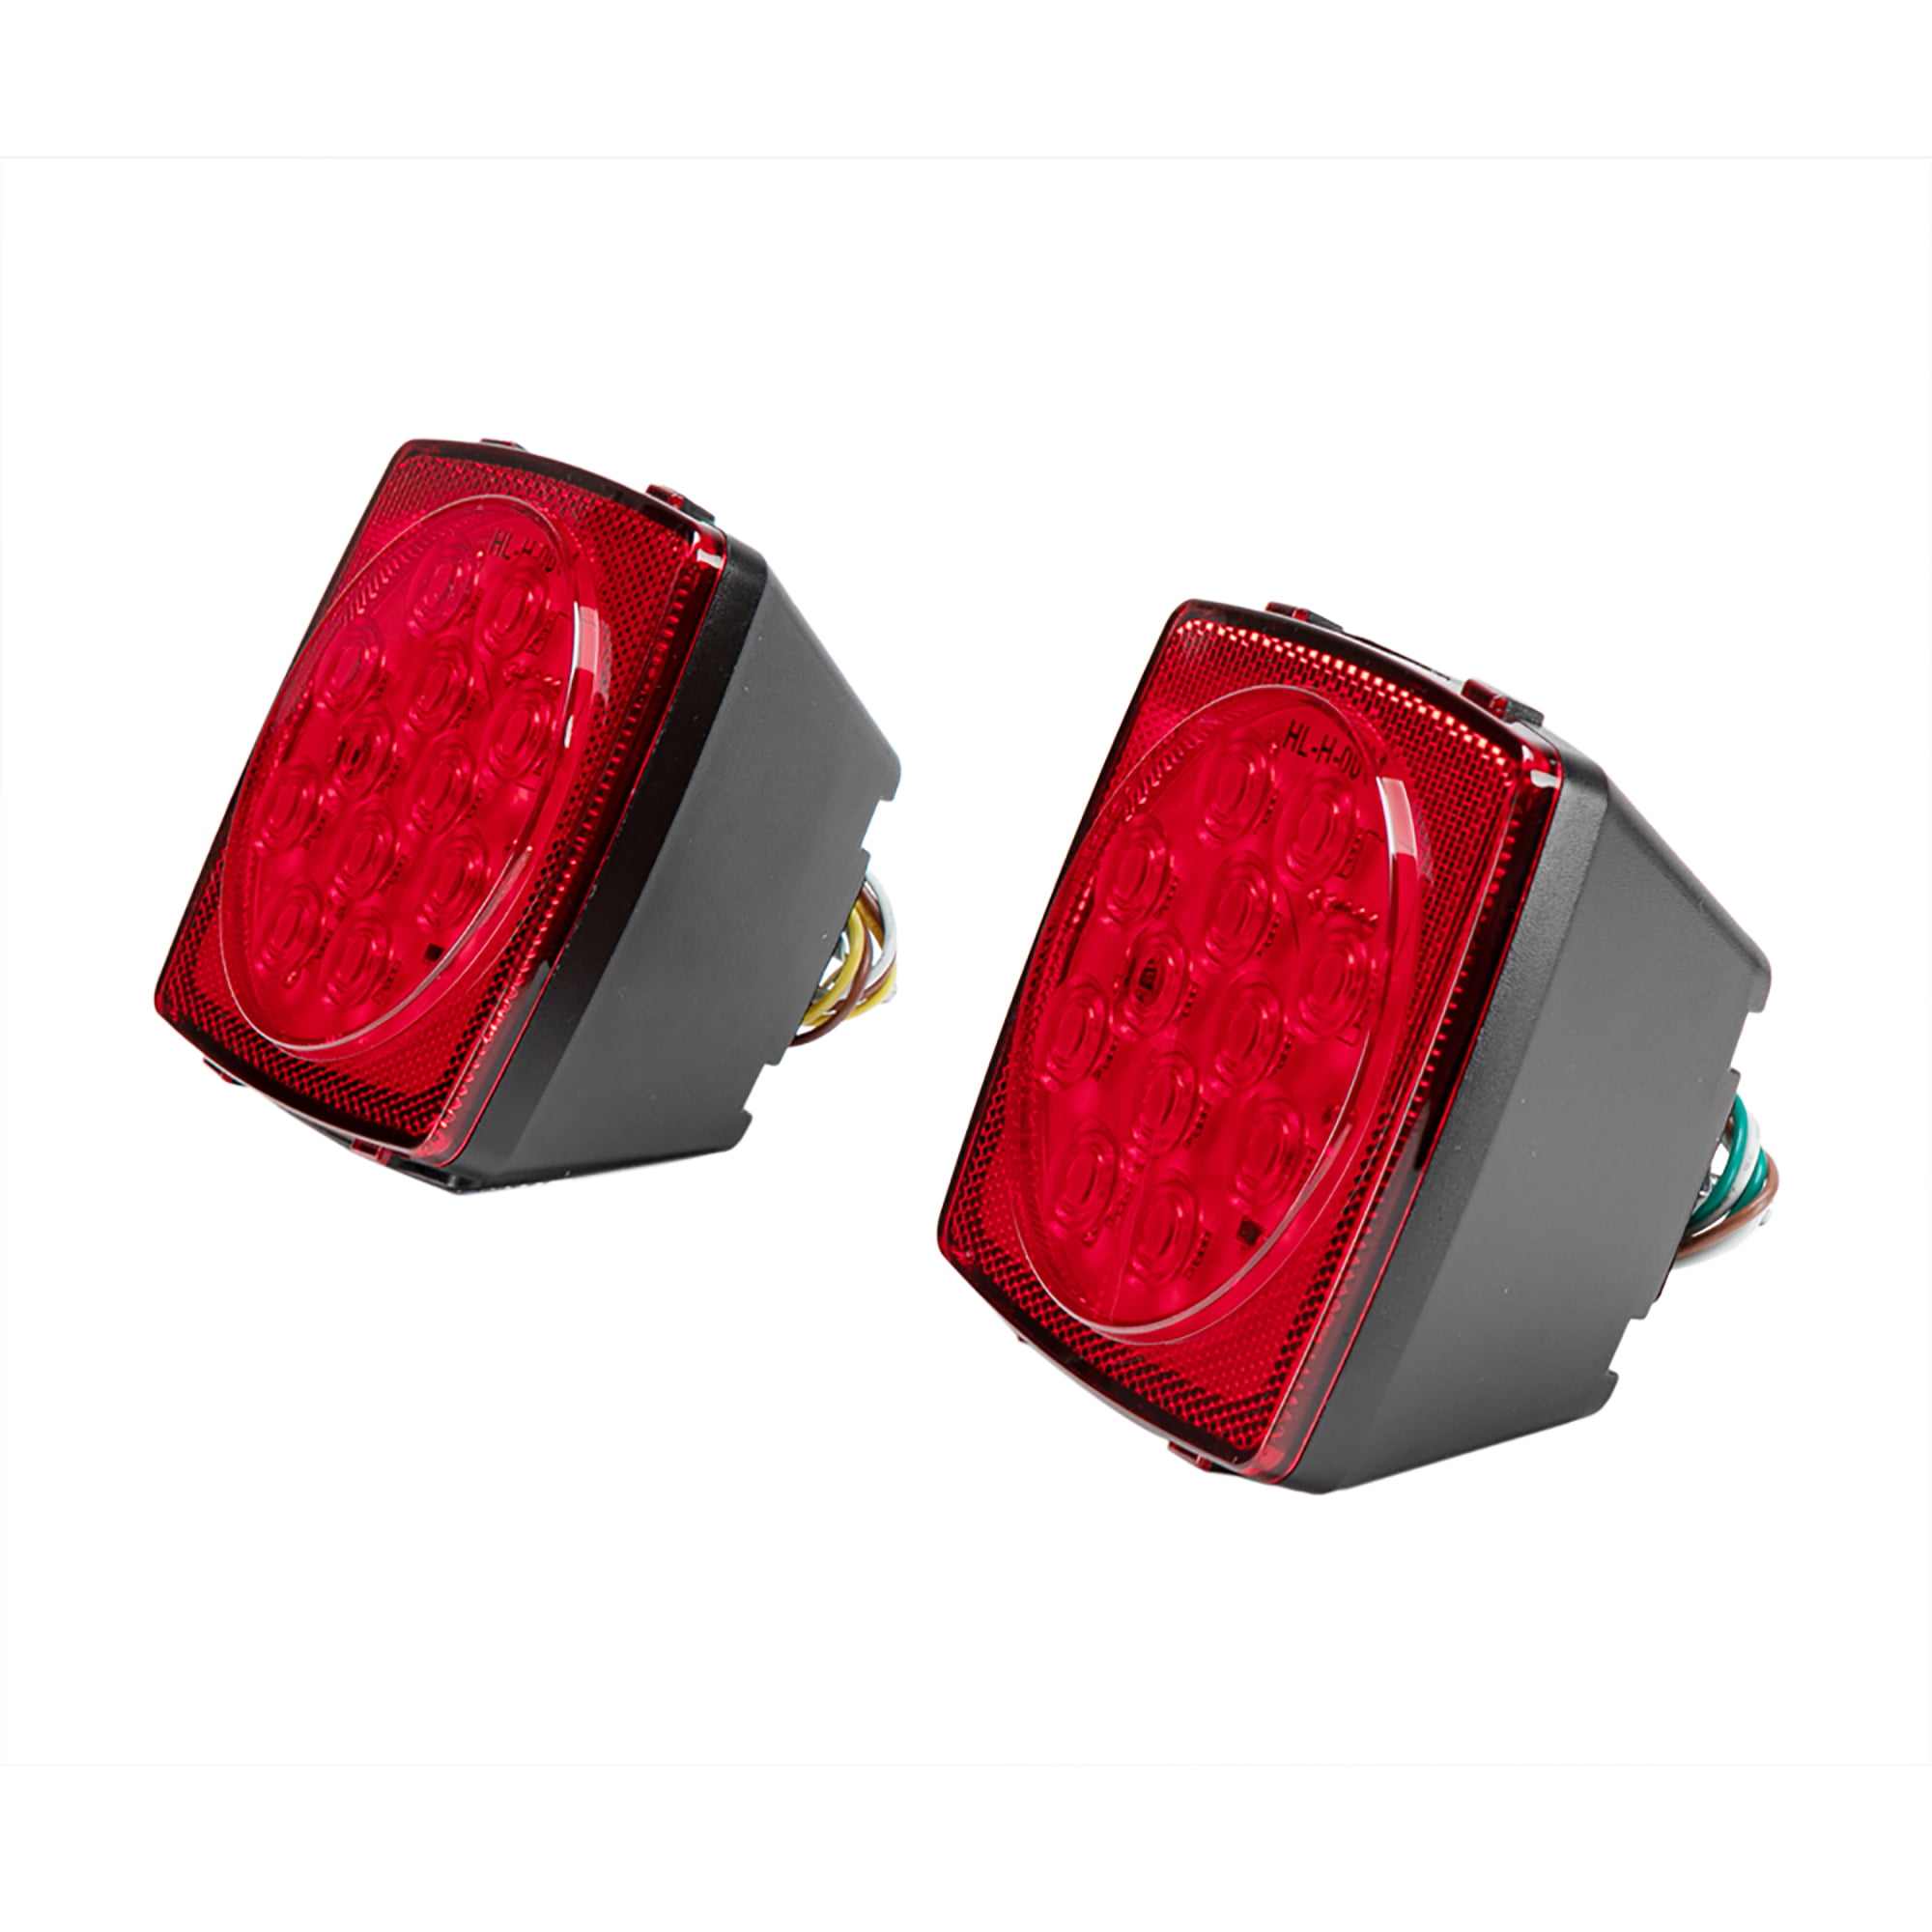 Astra Depot 1 Pair of Red/White Square LED Truck Trailer Lights Kit Under 80 inch Turn Signal Brake Stop Tail Light 12V 